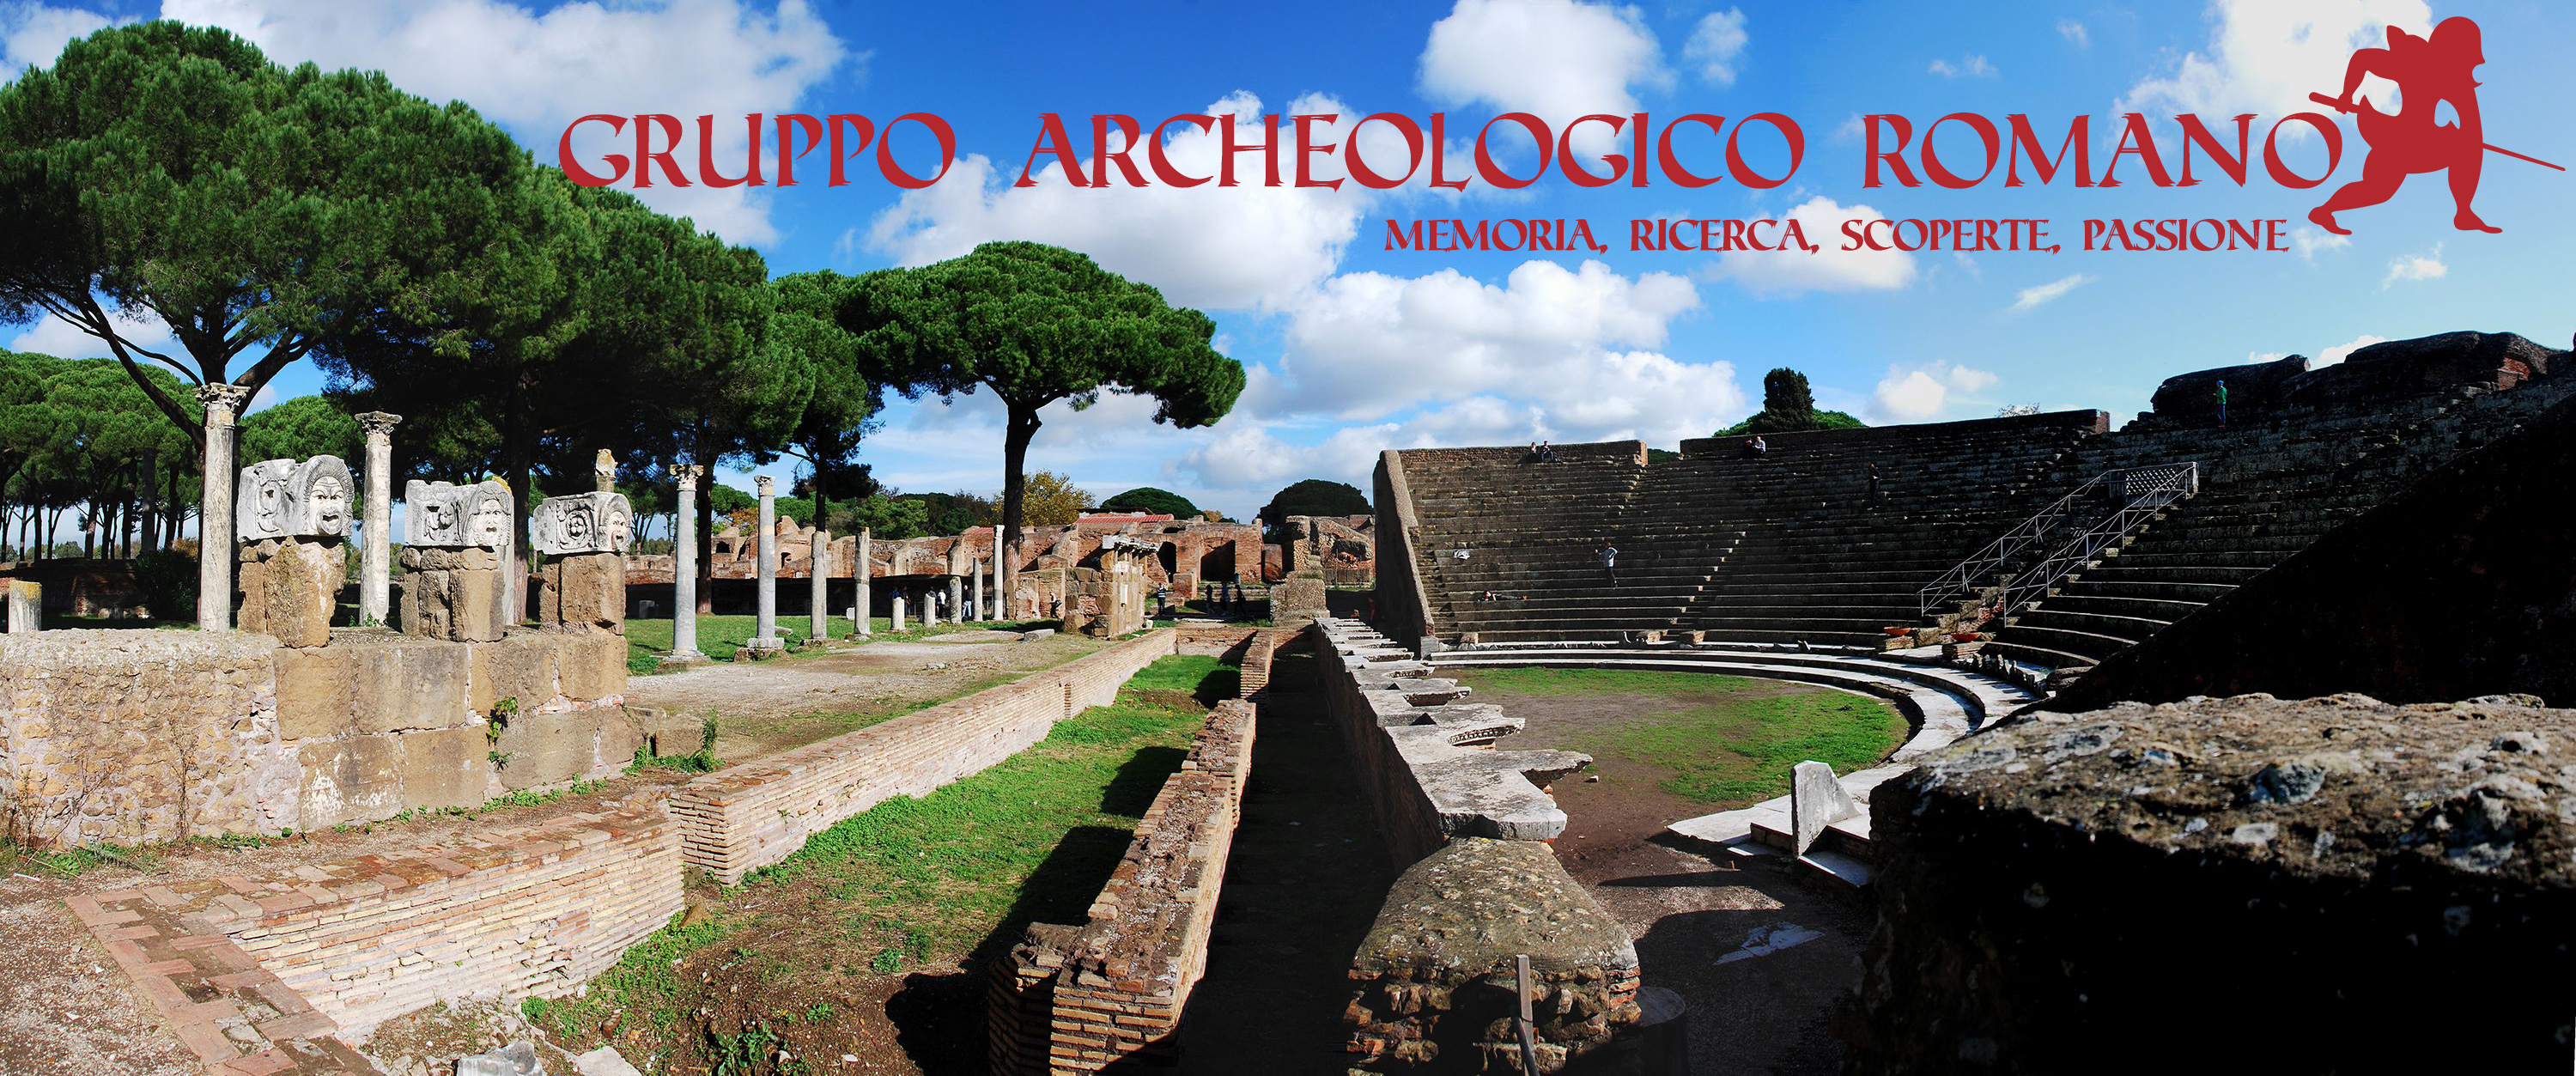 Gruppo Archeologico Romano